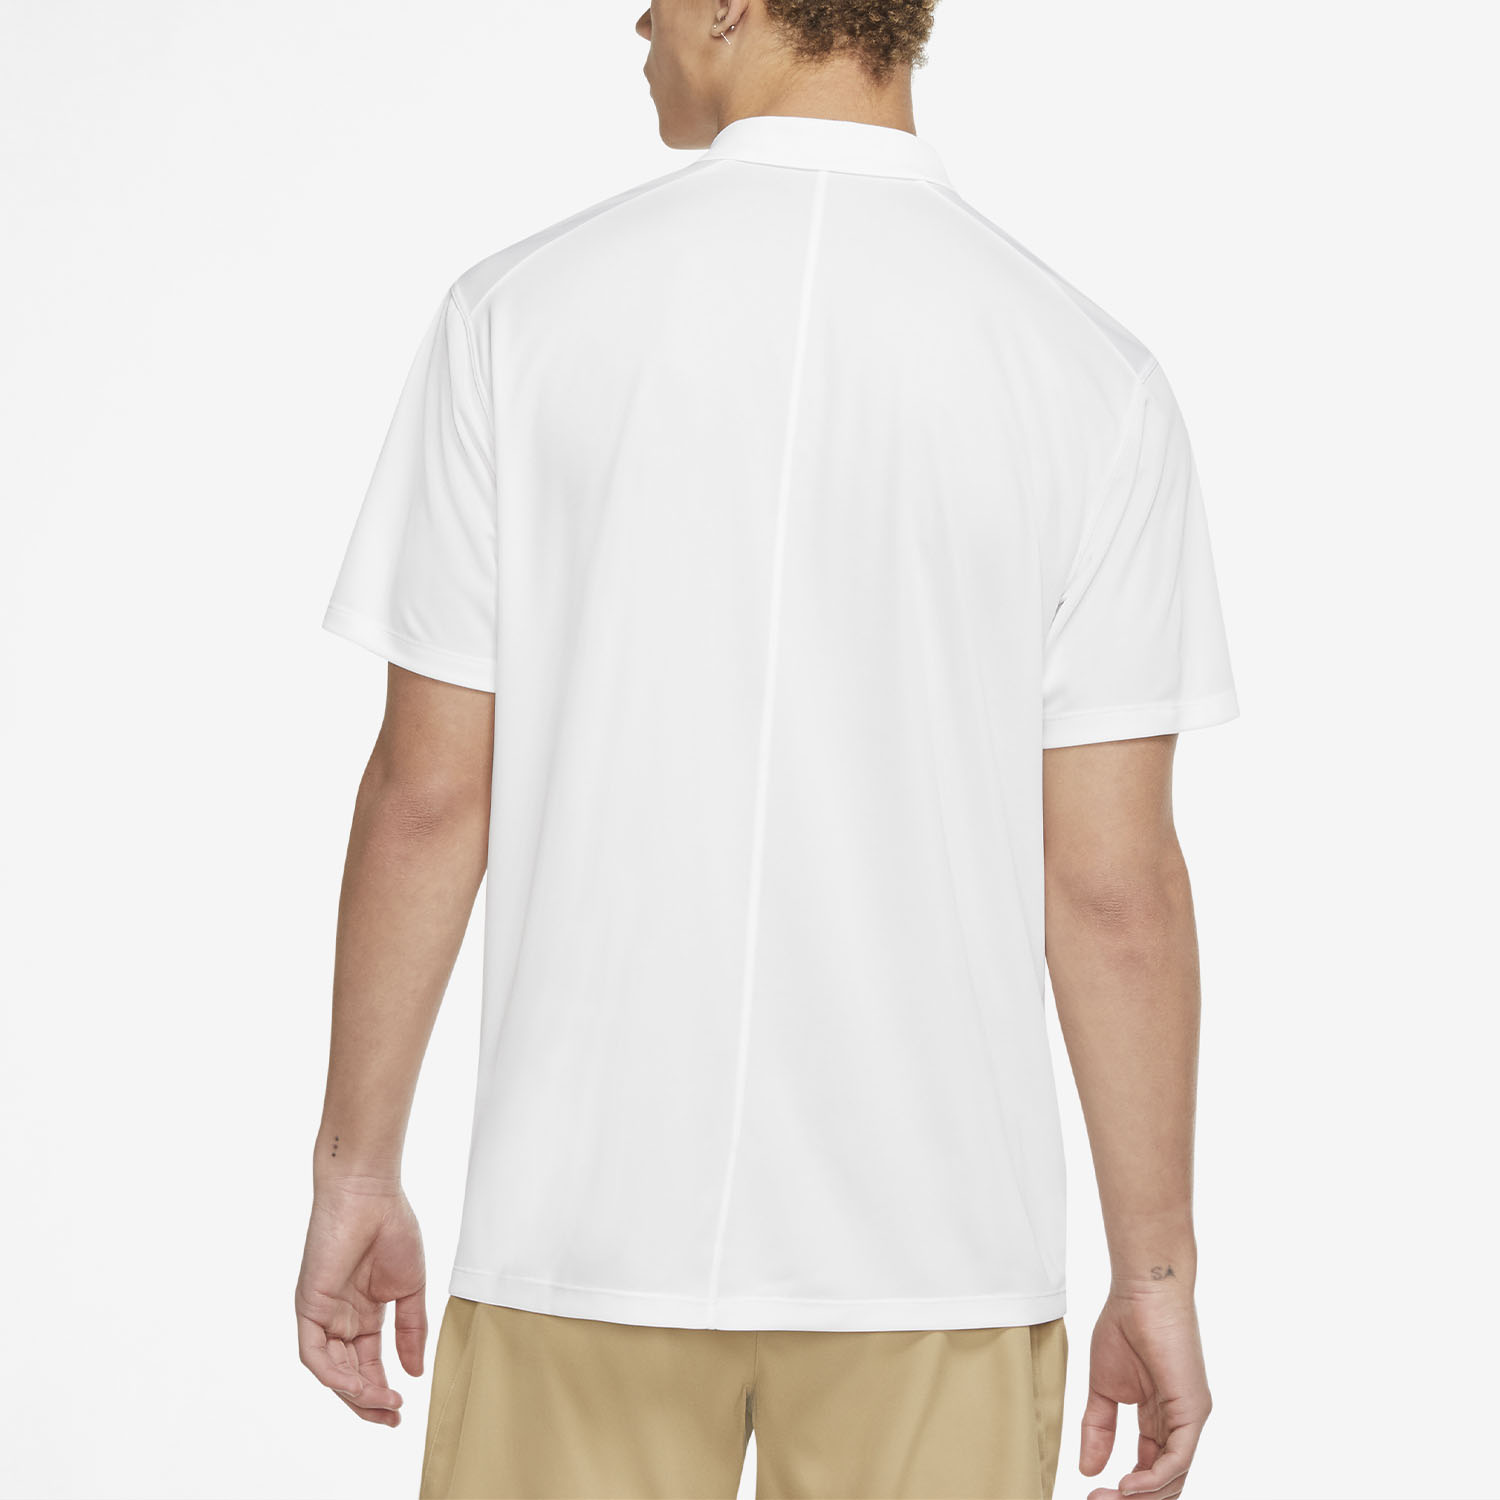 Nike Dri-FIT Classic Men's Tennis Polo - White/Black